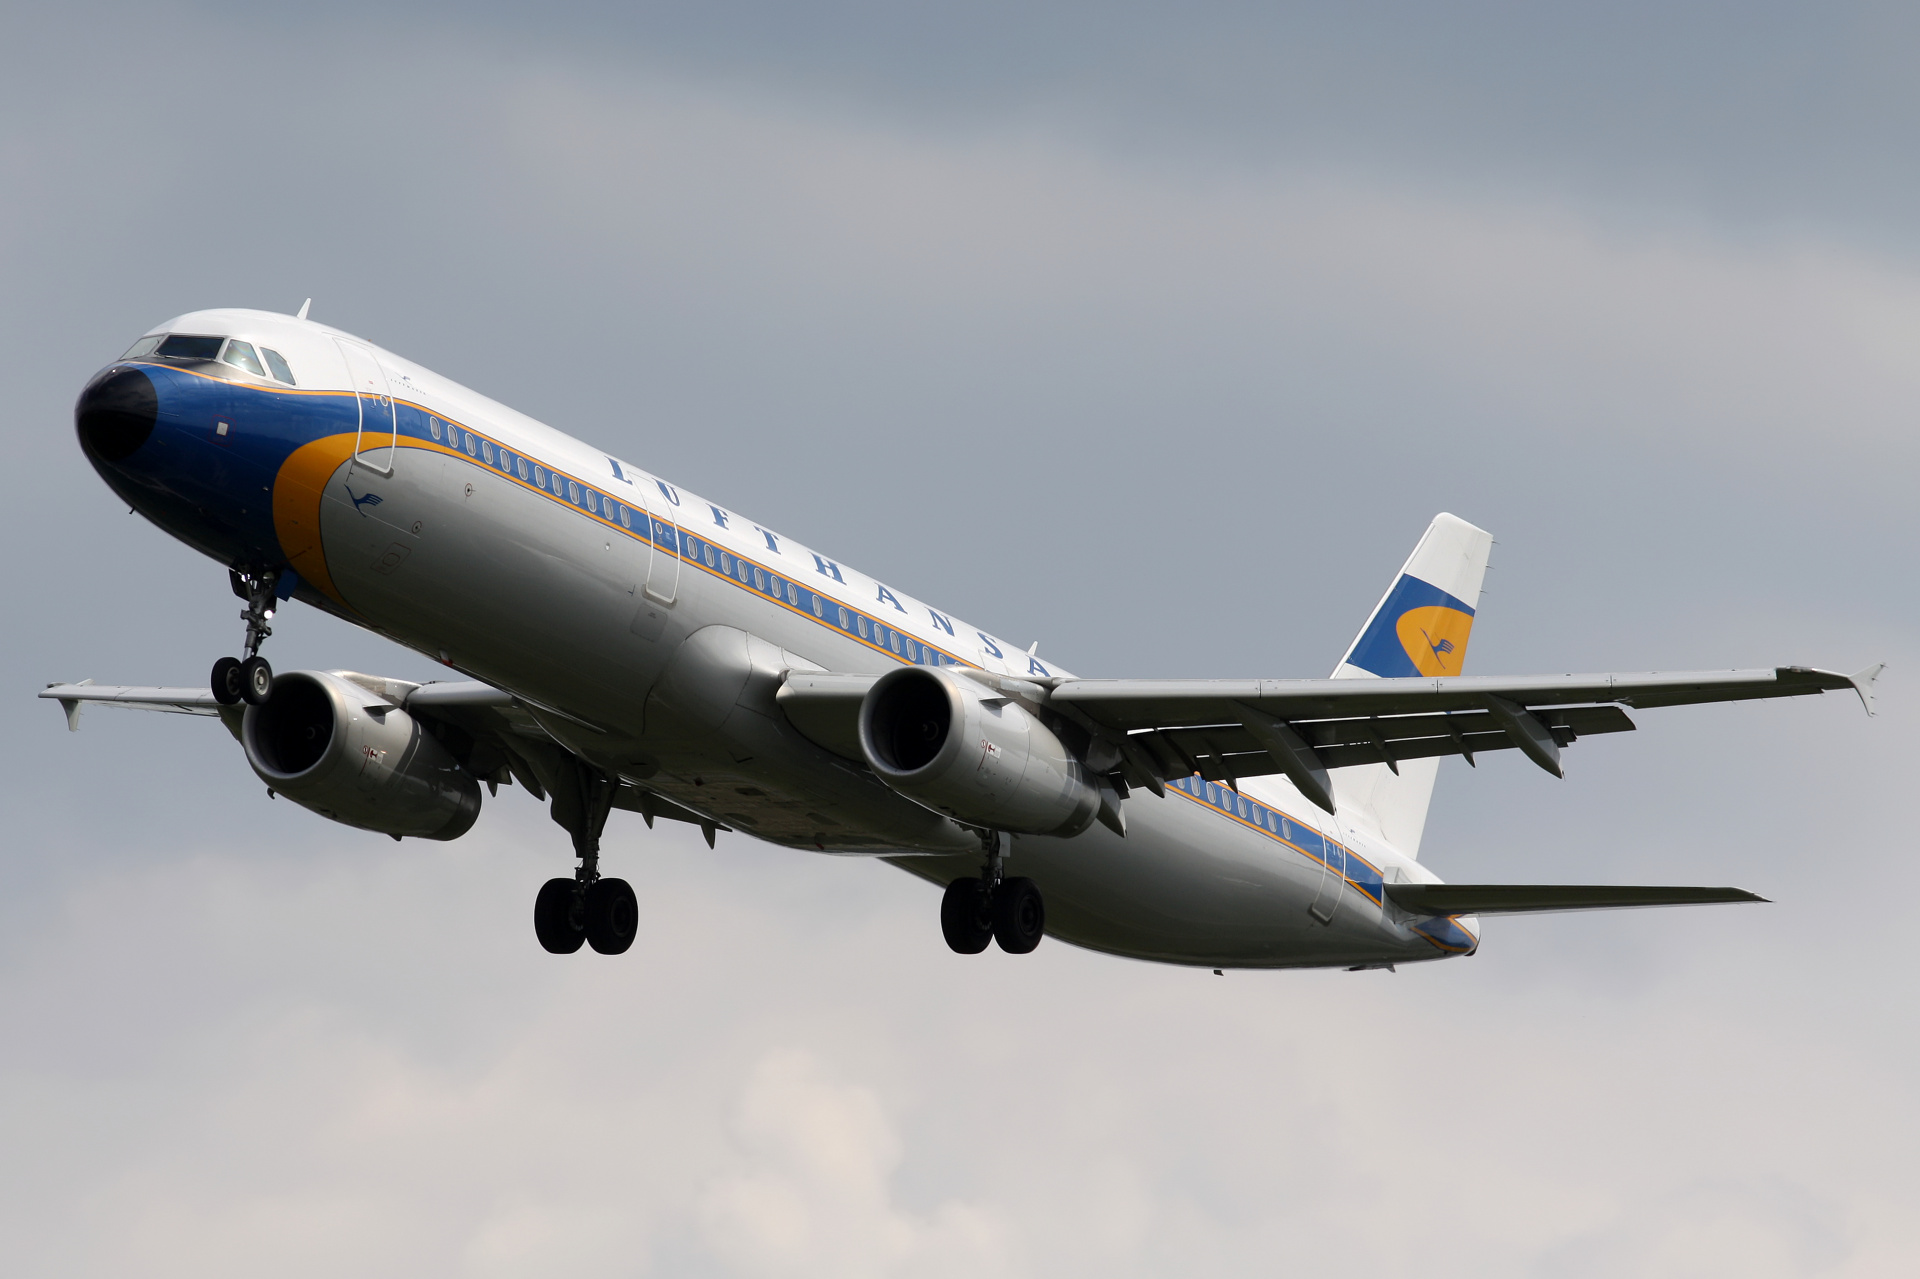 D-AIDV, Lufthansa (retro livery) (Aircraft » EPWA Spotting » Airbus A321-200 » Lufthansa)